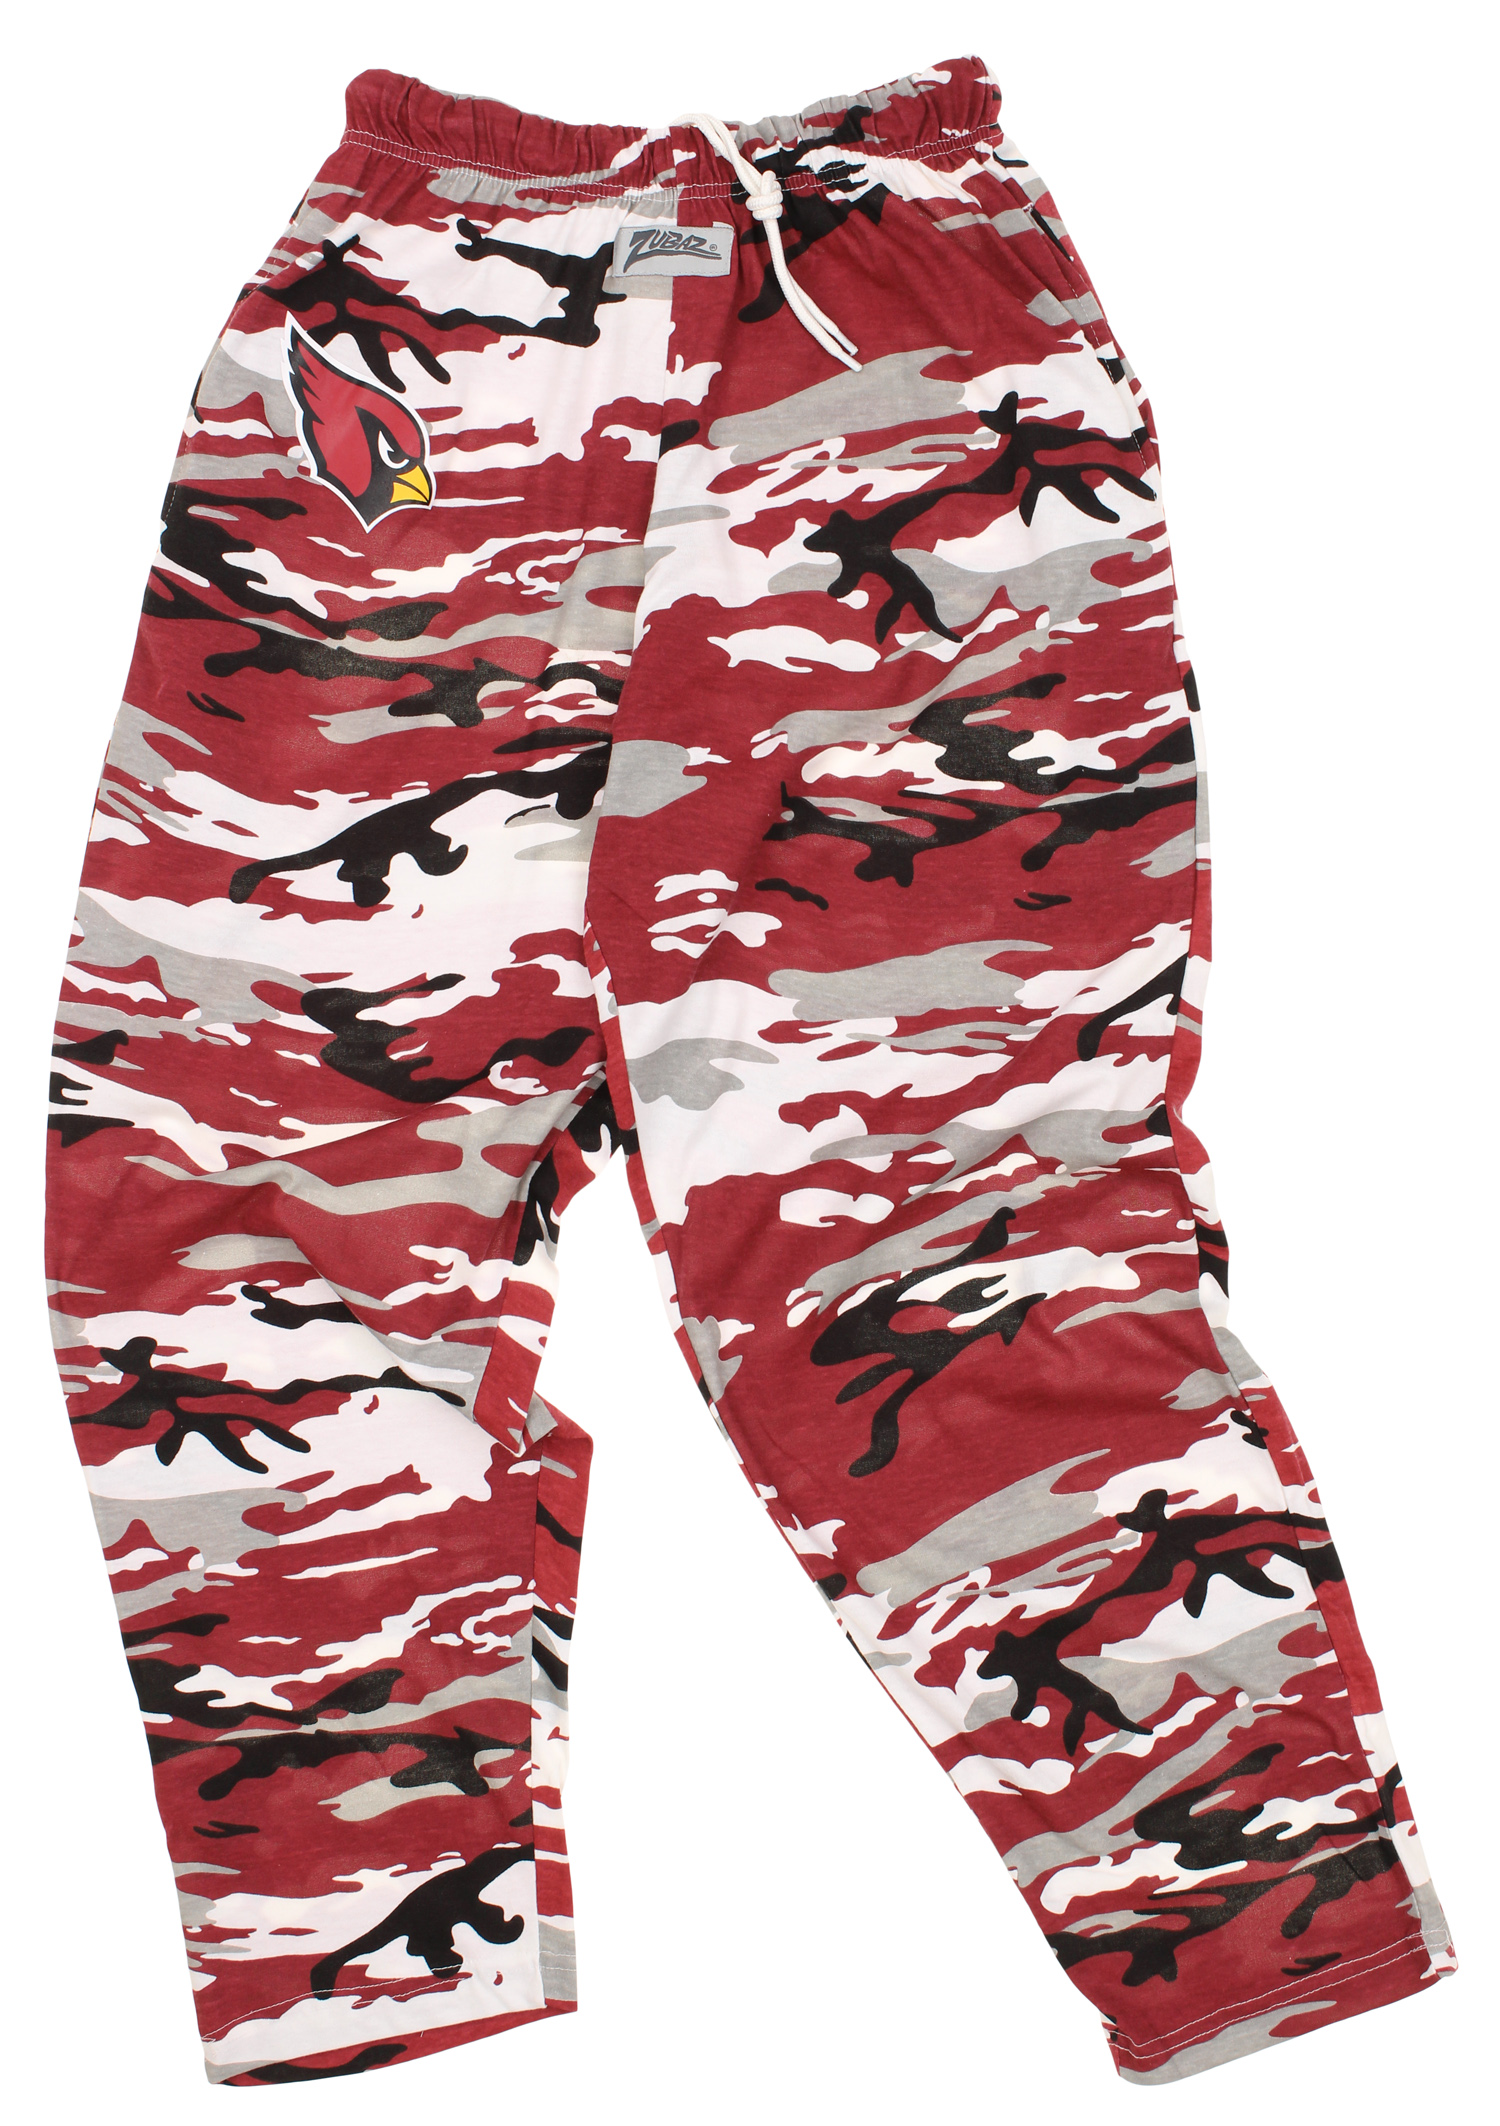 Zubaz NFL Men's Arizona Cardinals Camo Lounge Pants | eBay